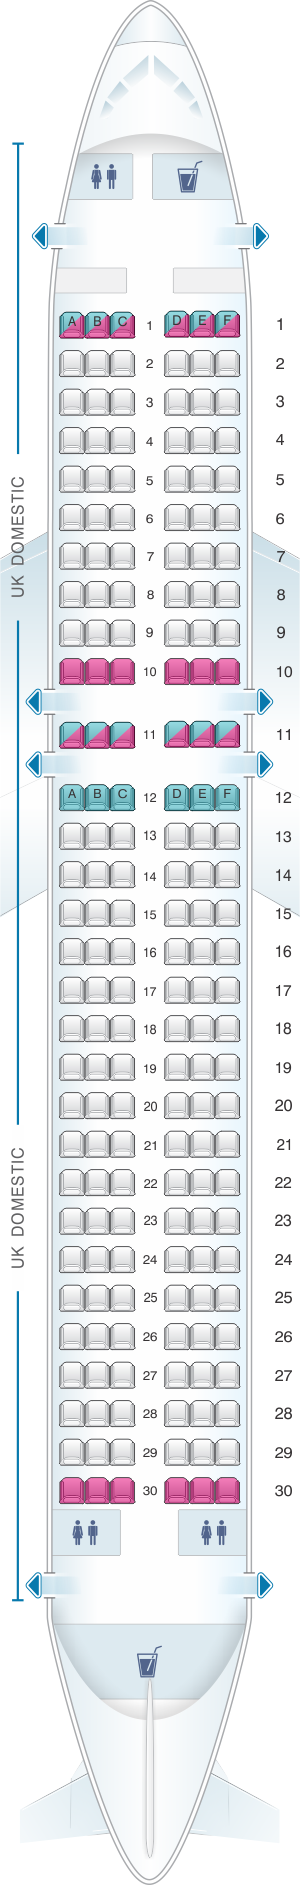 Seat Map British Airways Airbus A320 Domestic Layout | SeatMaestro